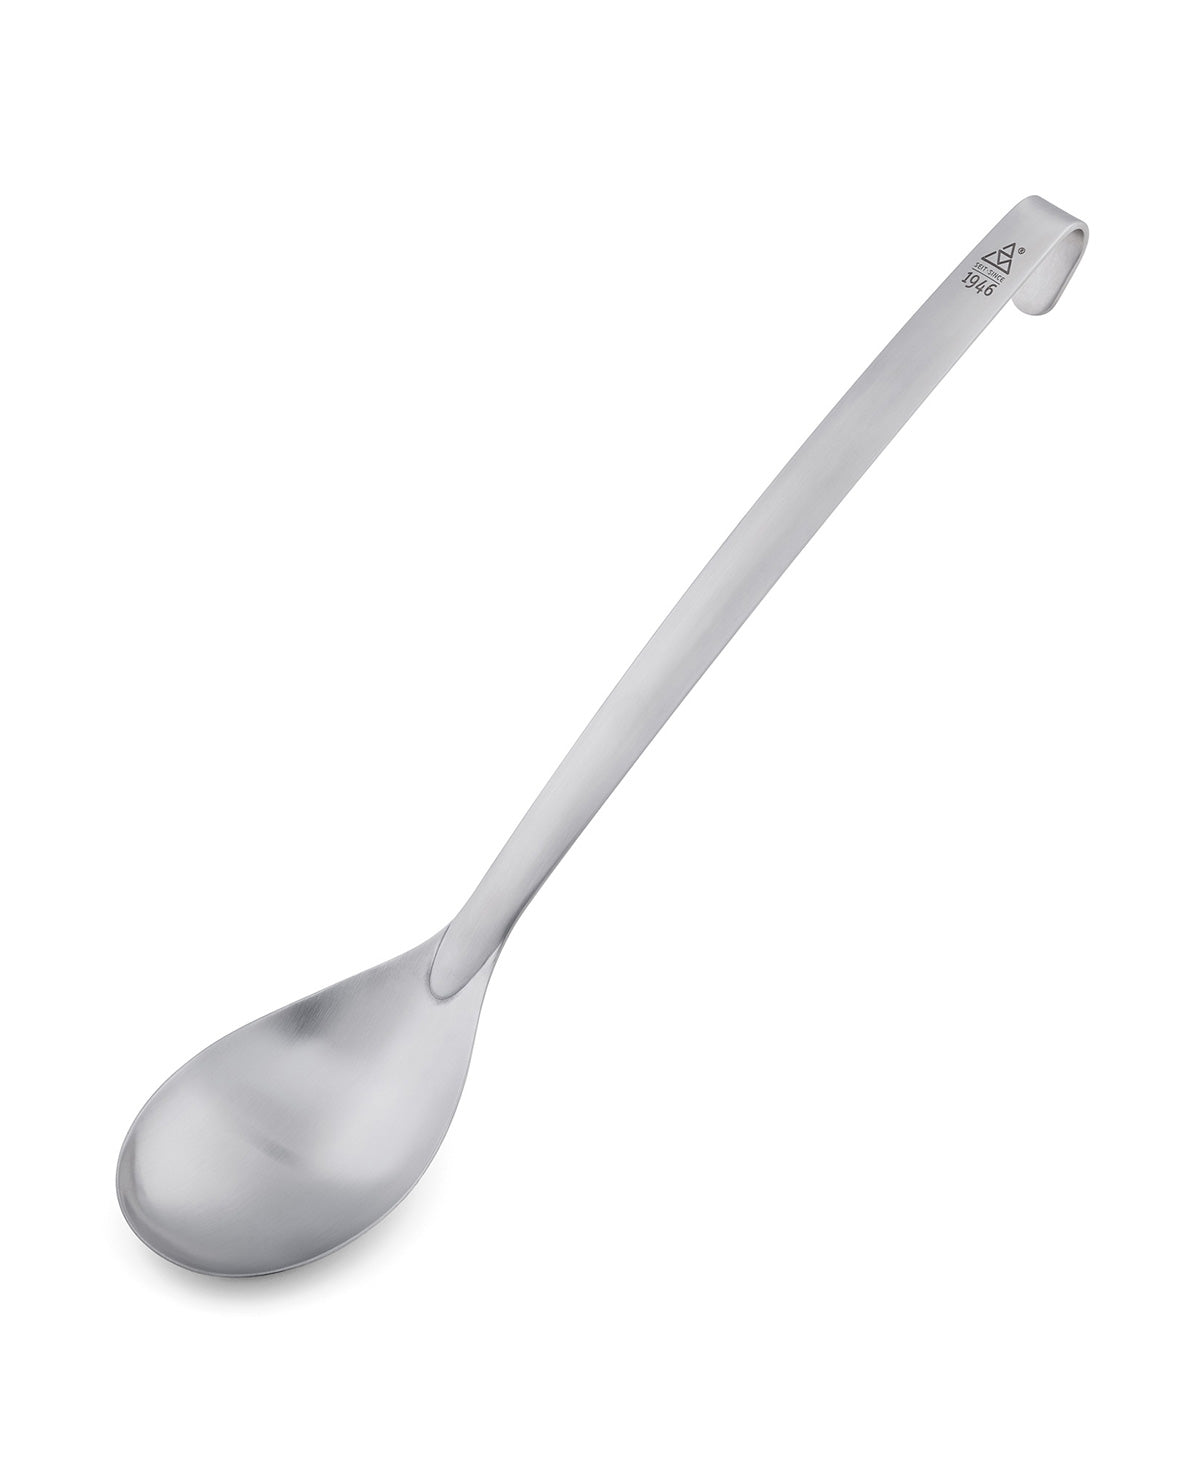 Serving Spoon 1946-58 713 38 01